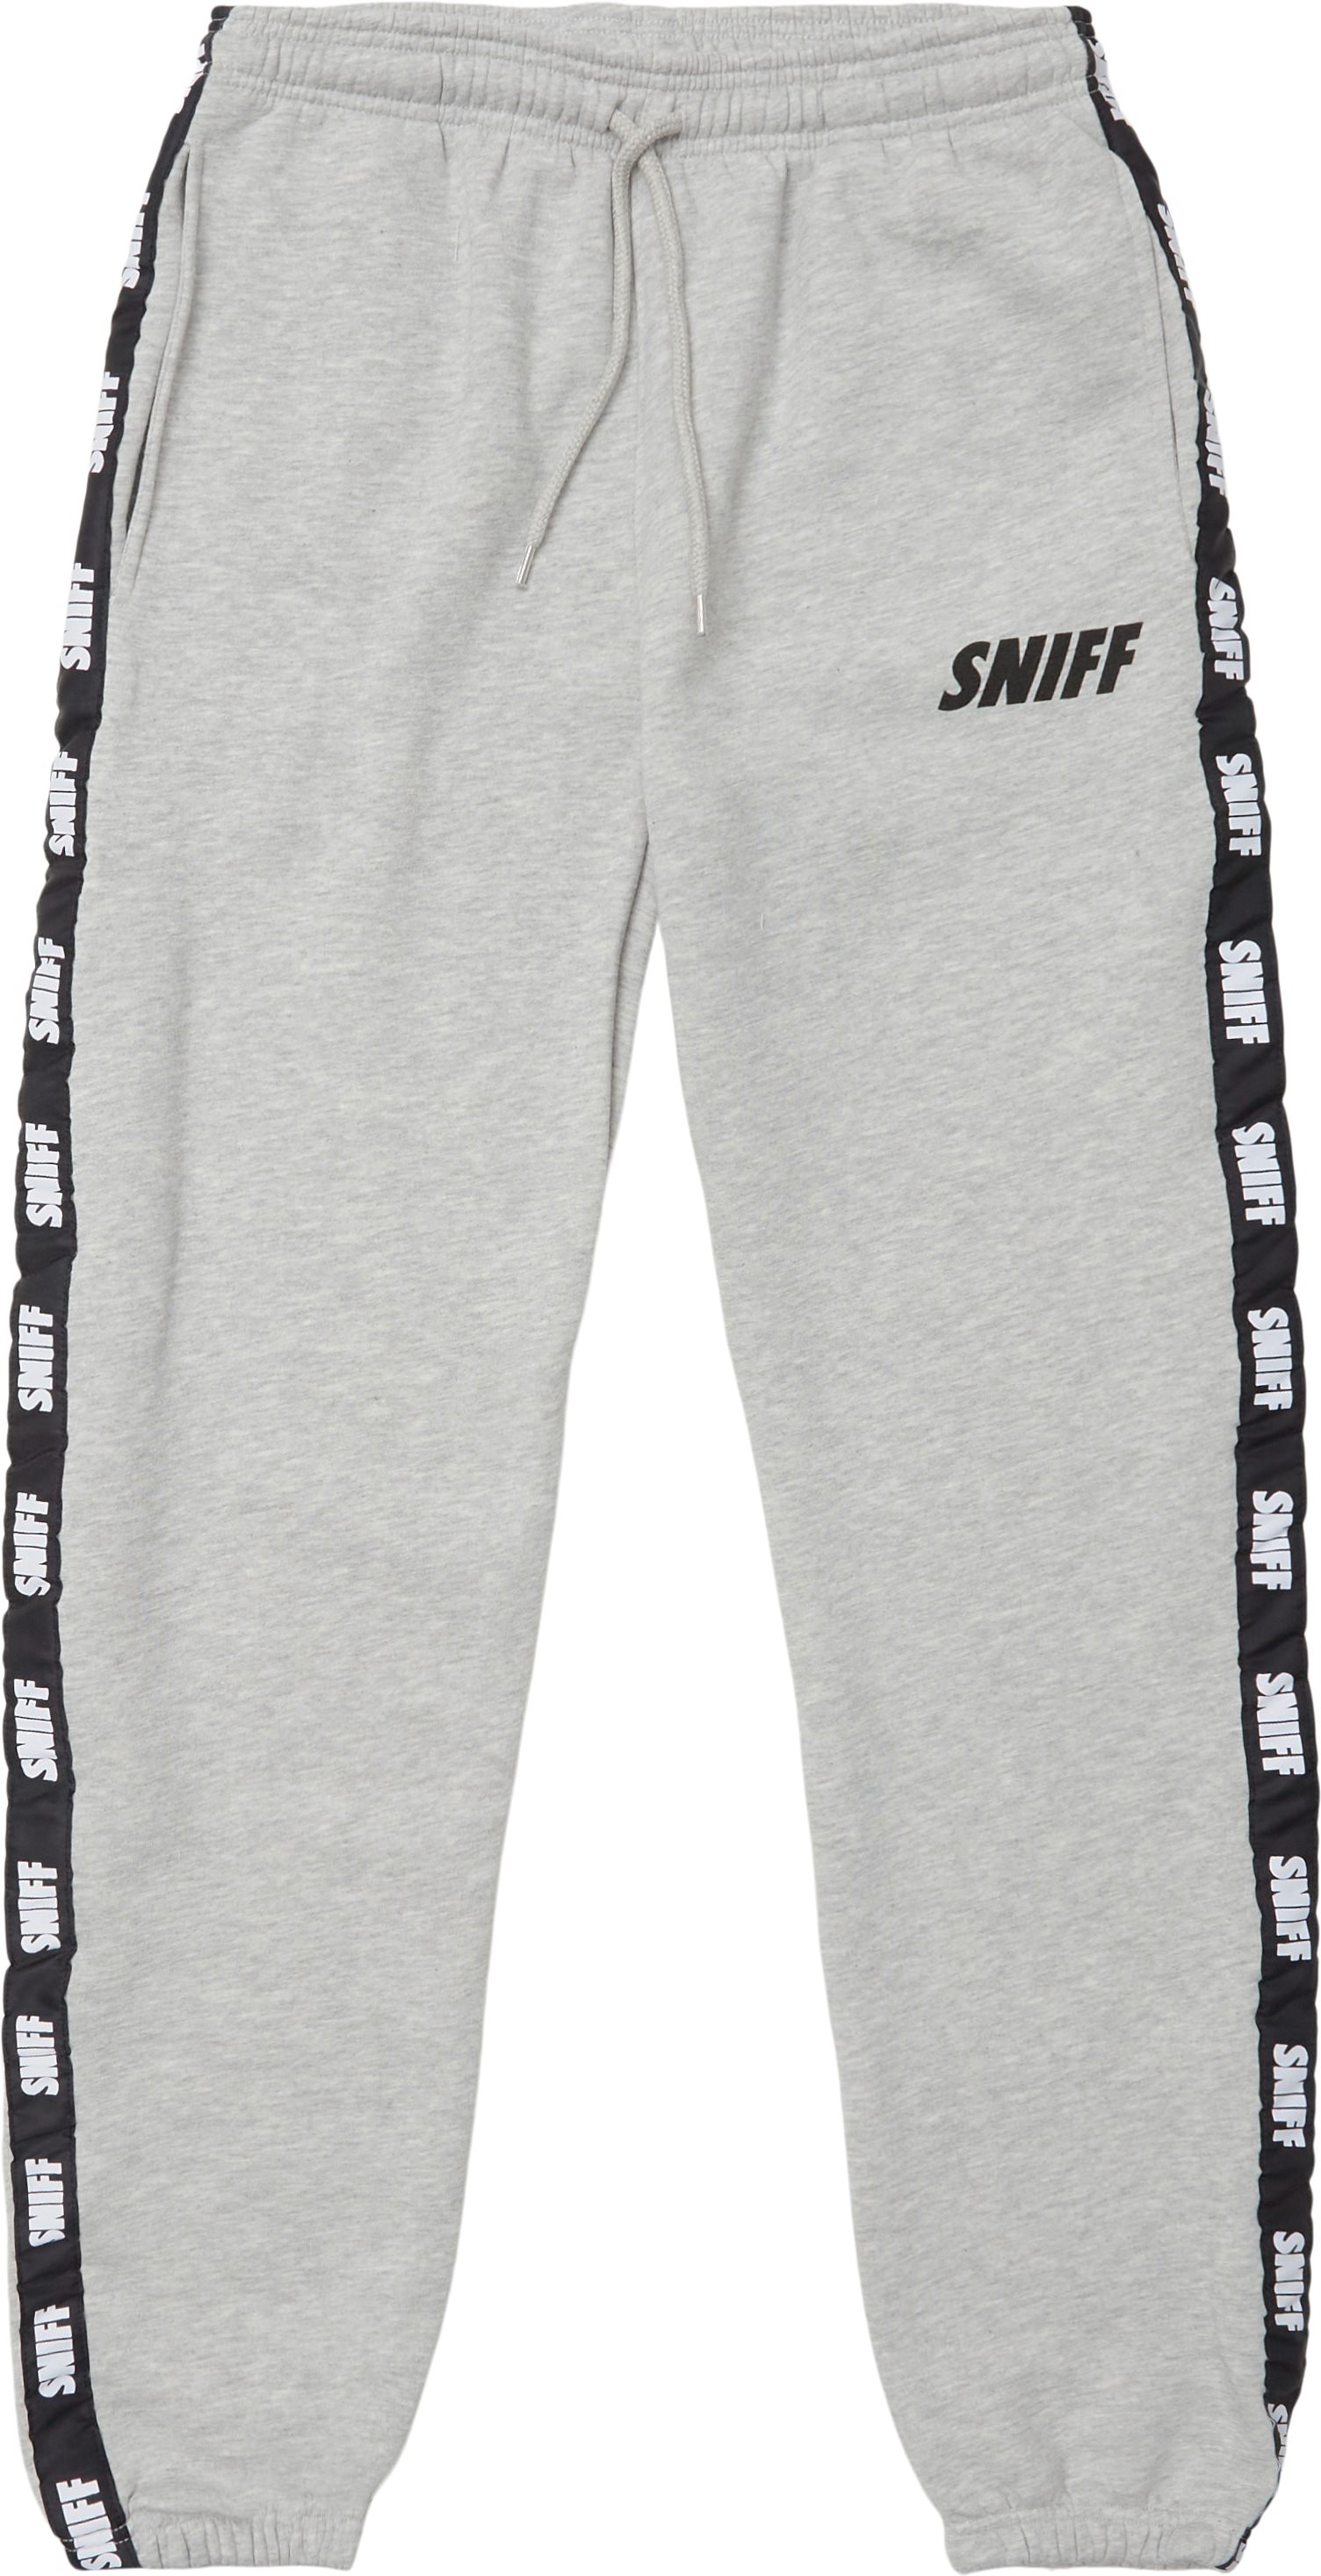 Wolf sweatpants - Trousers - Regular fit - Grey